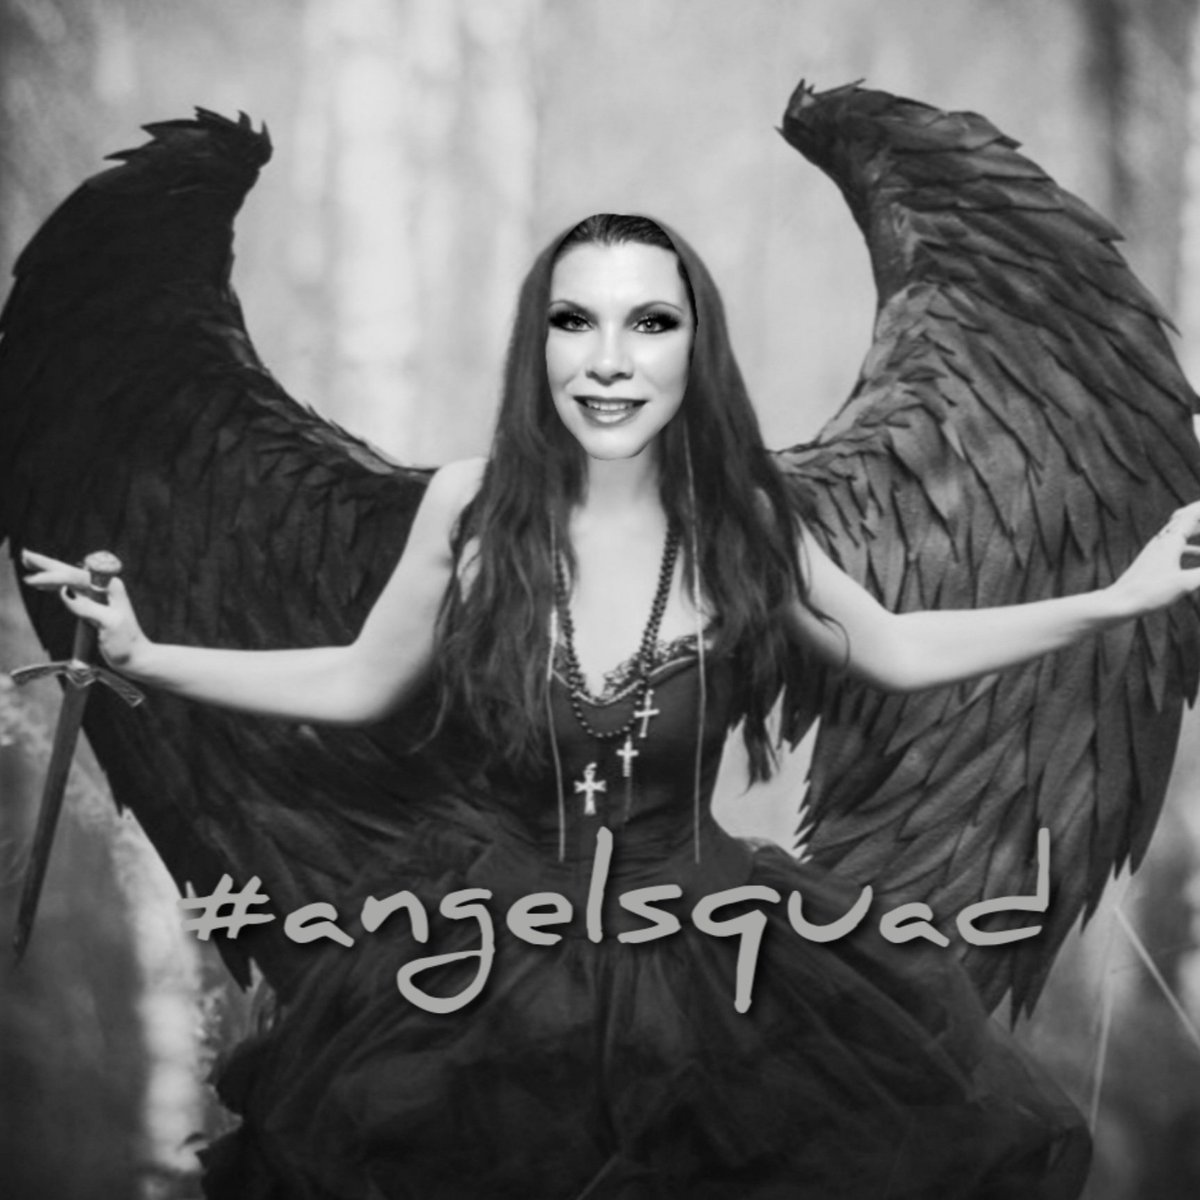 Got bored so thought I'd do a new edit. I just love b&w pics! 🖤😜😇 #angelsquad #darkangel #mycurrentmood 
#NewProfilePic